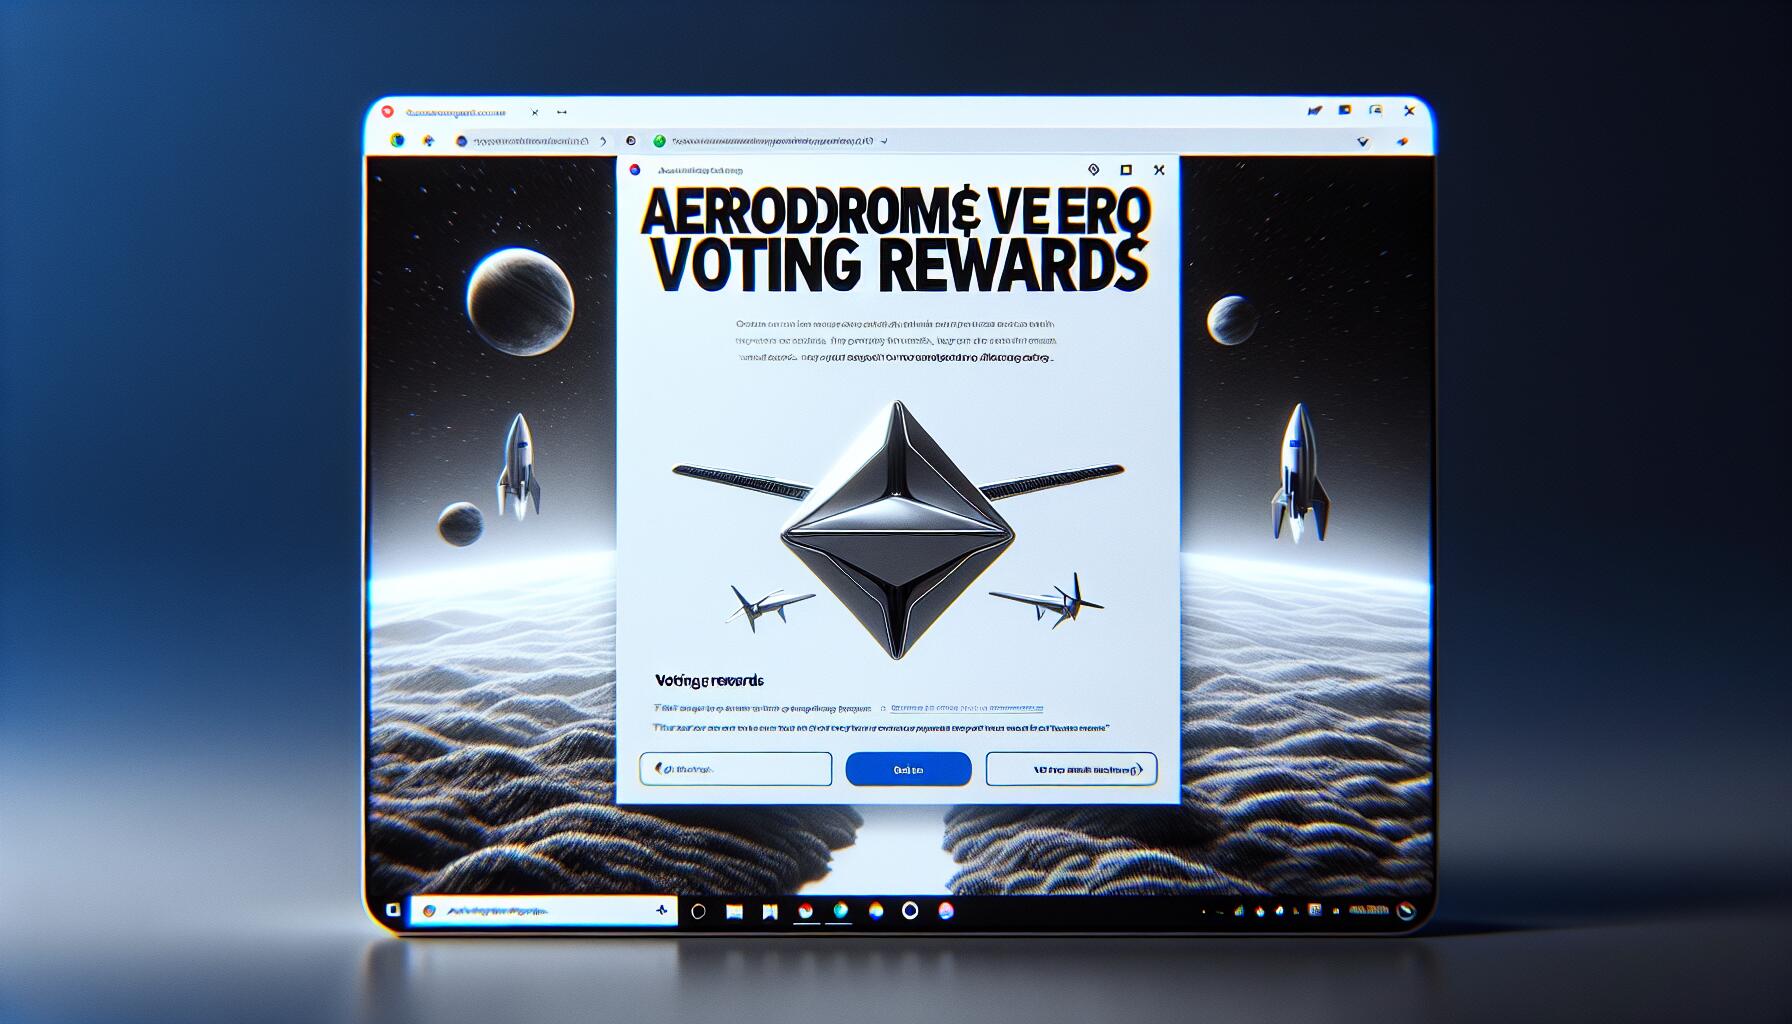 aerodrome $veaero voting rewards ads